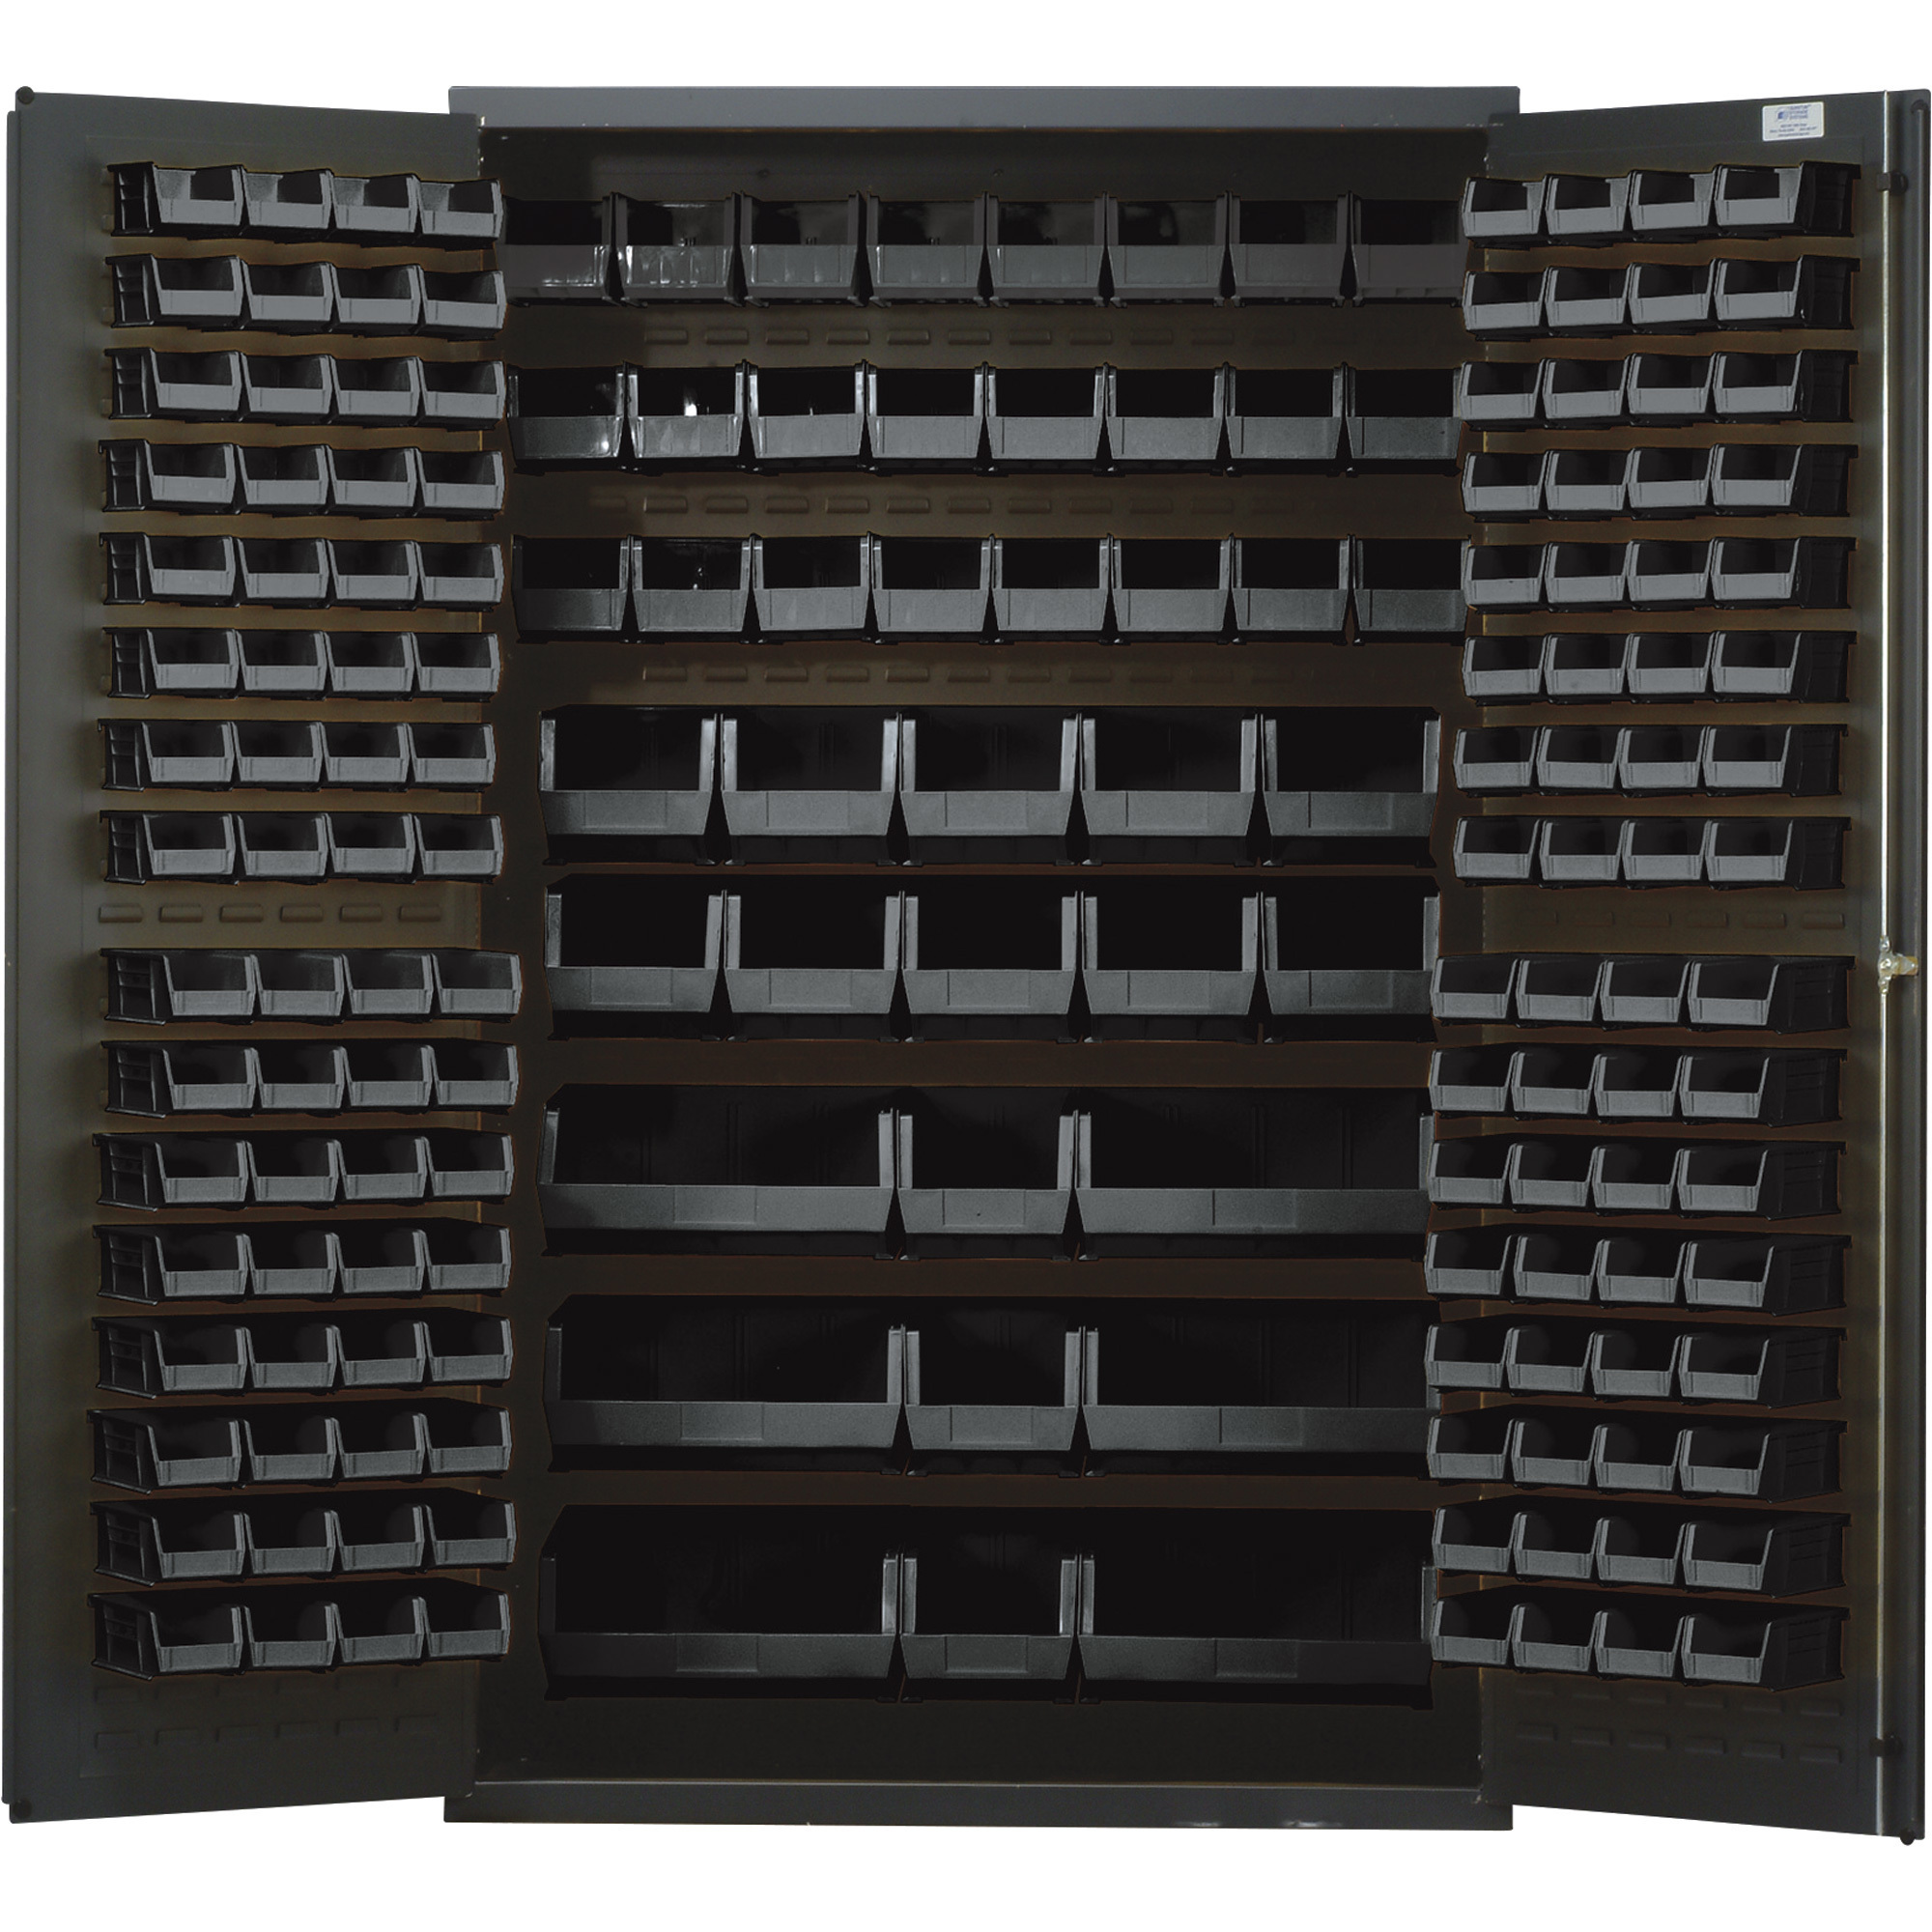 Quantum Storage Cabinet With 171 Bins, 48Inch x 24Inch x 78Inch Size, Black